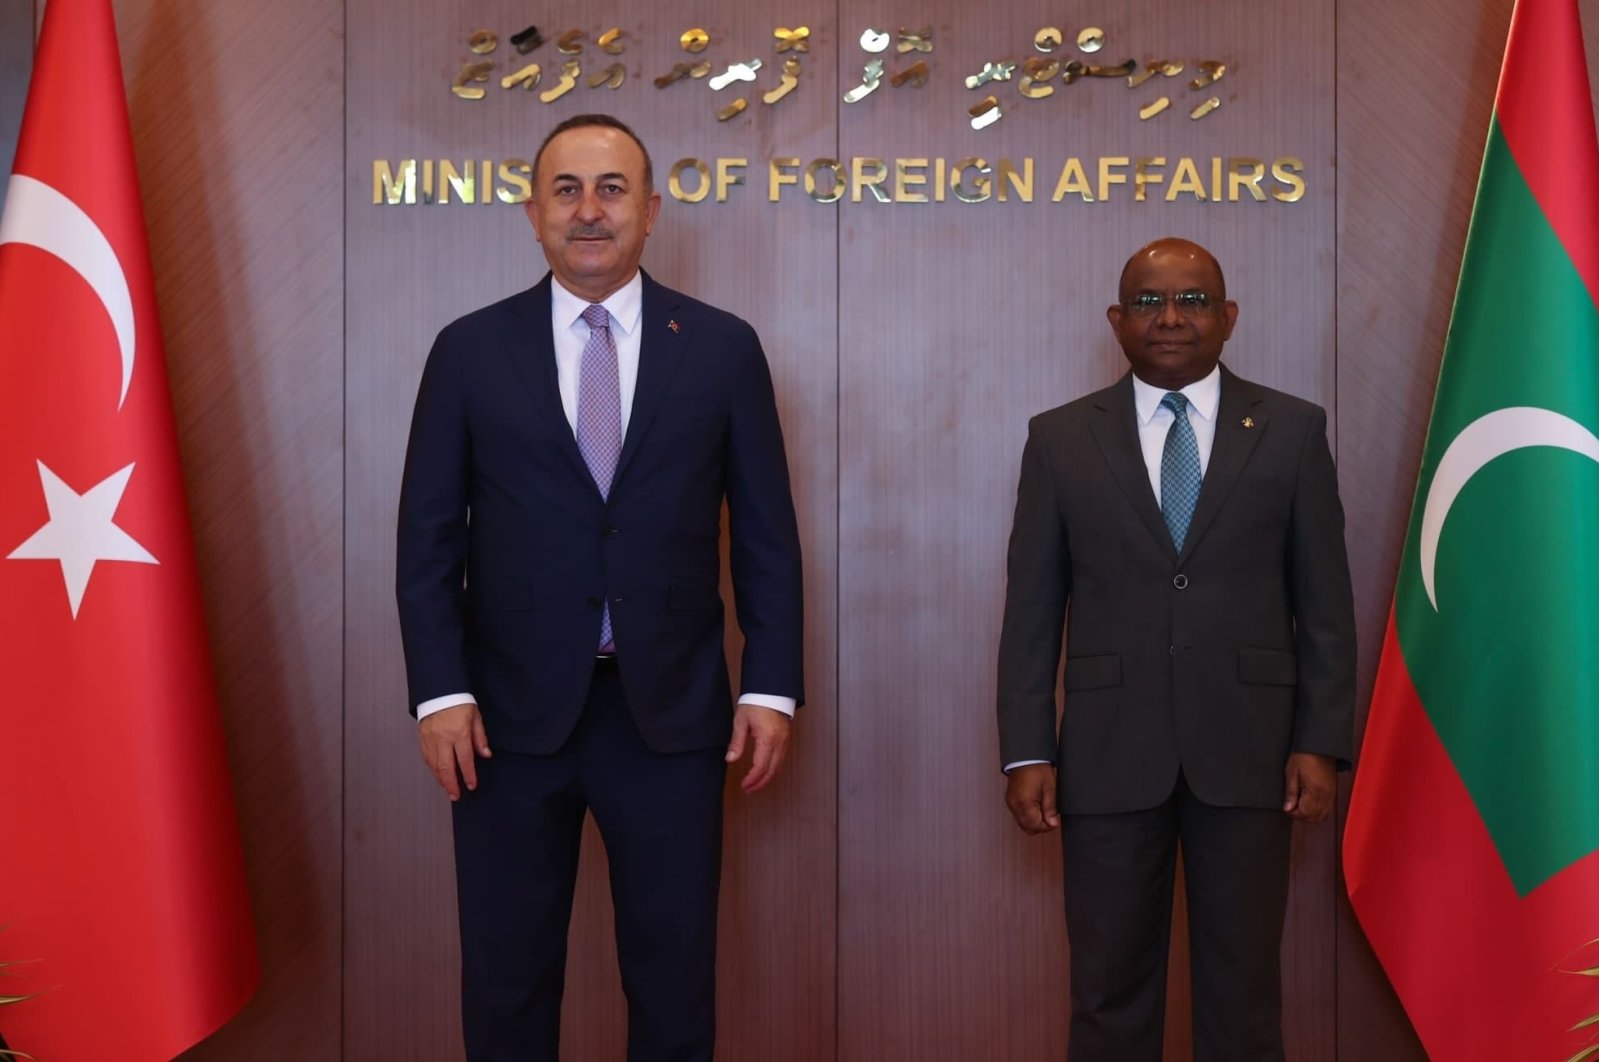 Turkish Foreign Minister Mevlüt Çavuşoğlu (L) and Maldivian counterpart Abdulla Shahid during a meeting in Male, Maldives, Jan. 30, 2022. (IHA PHOTO)